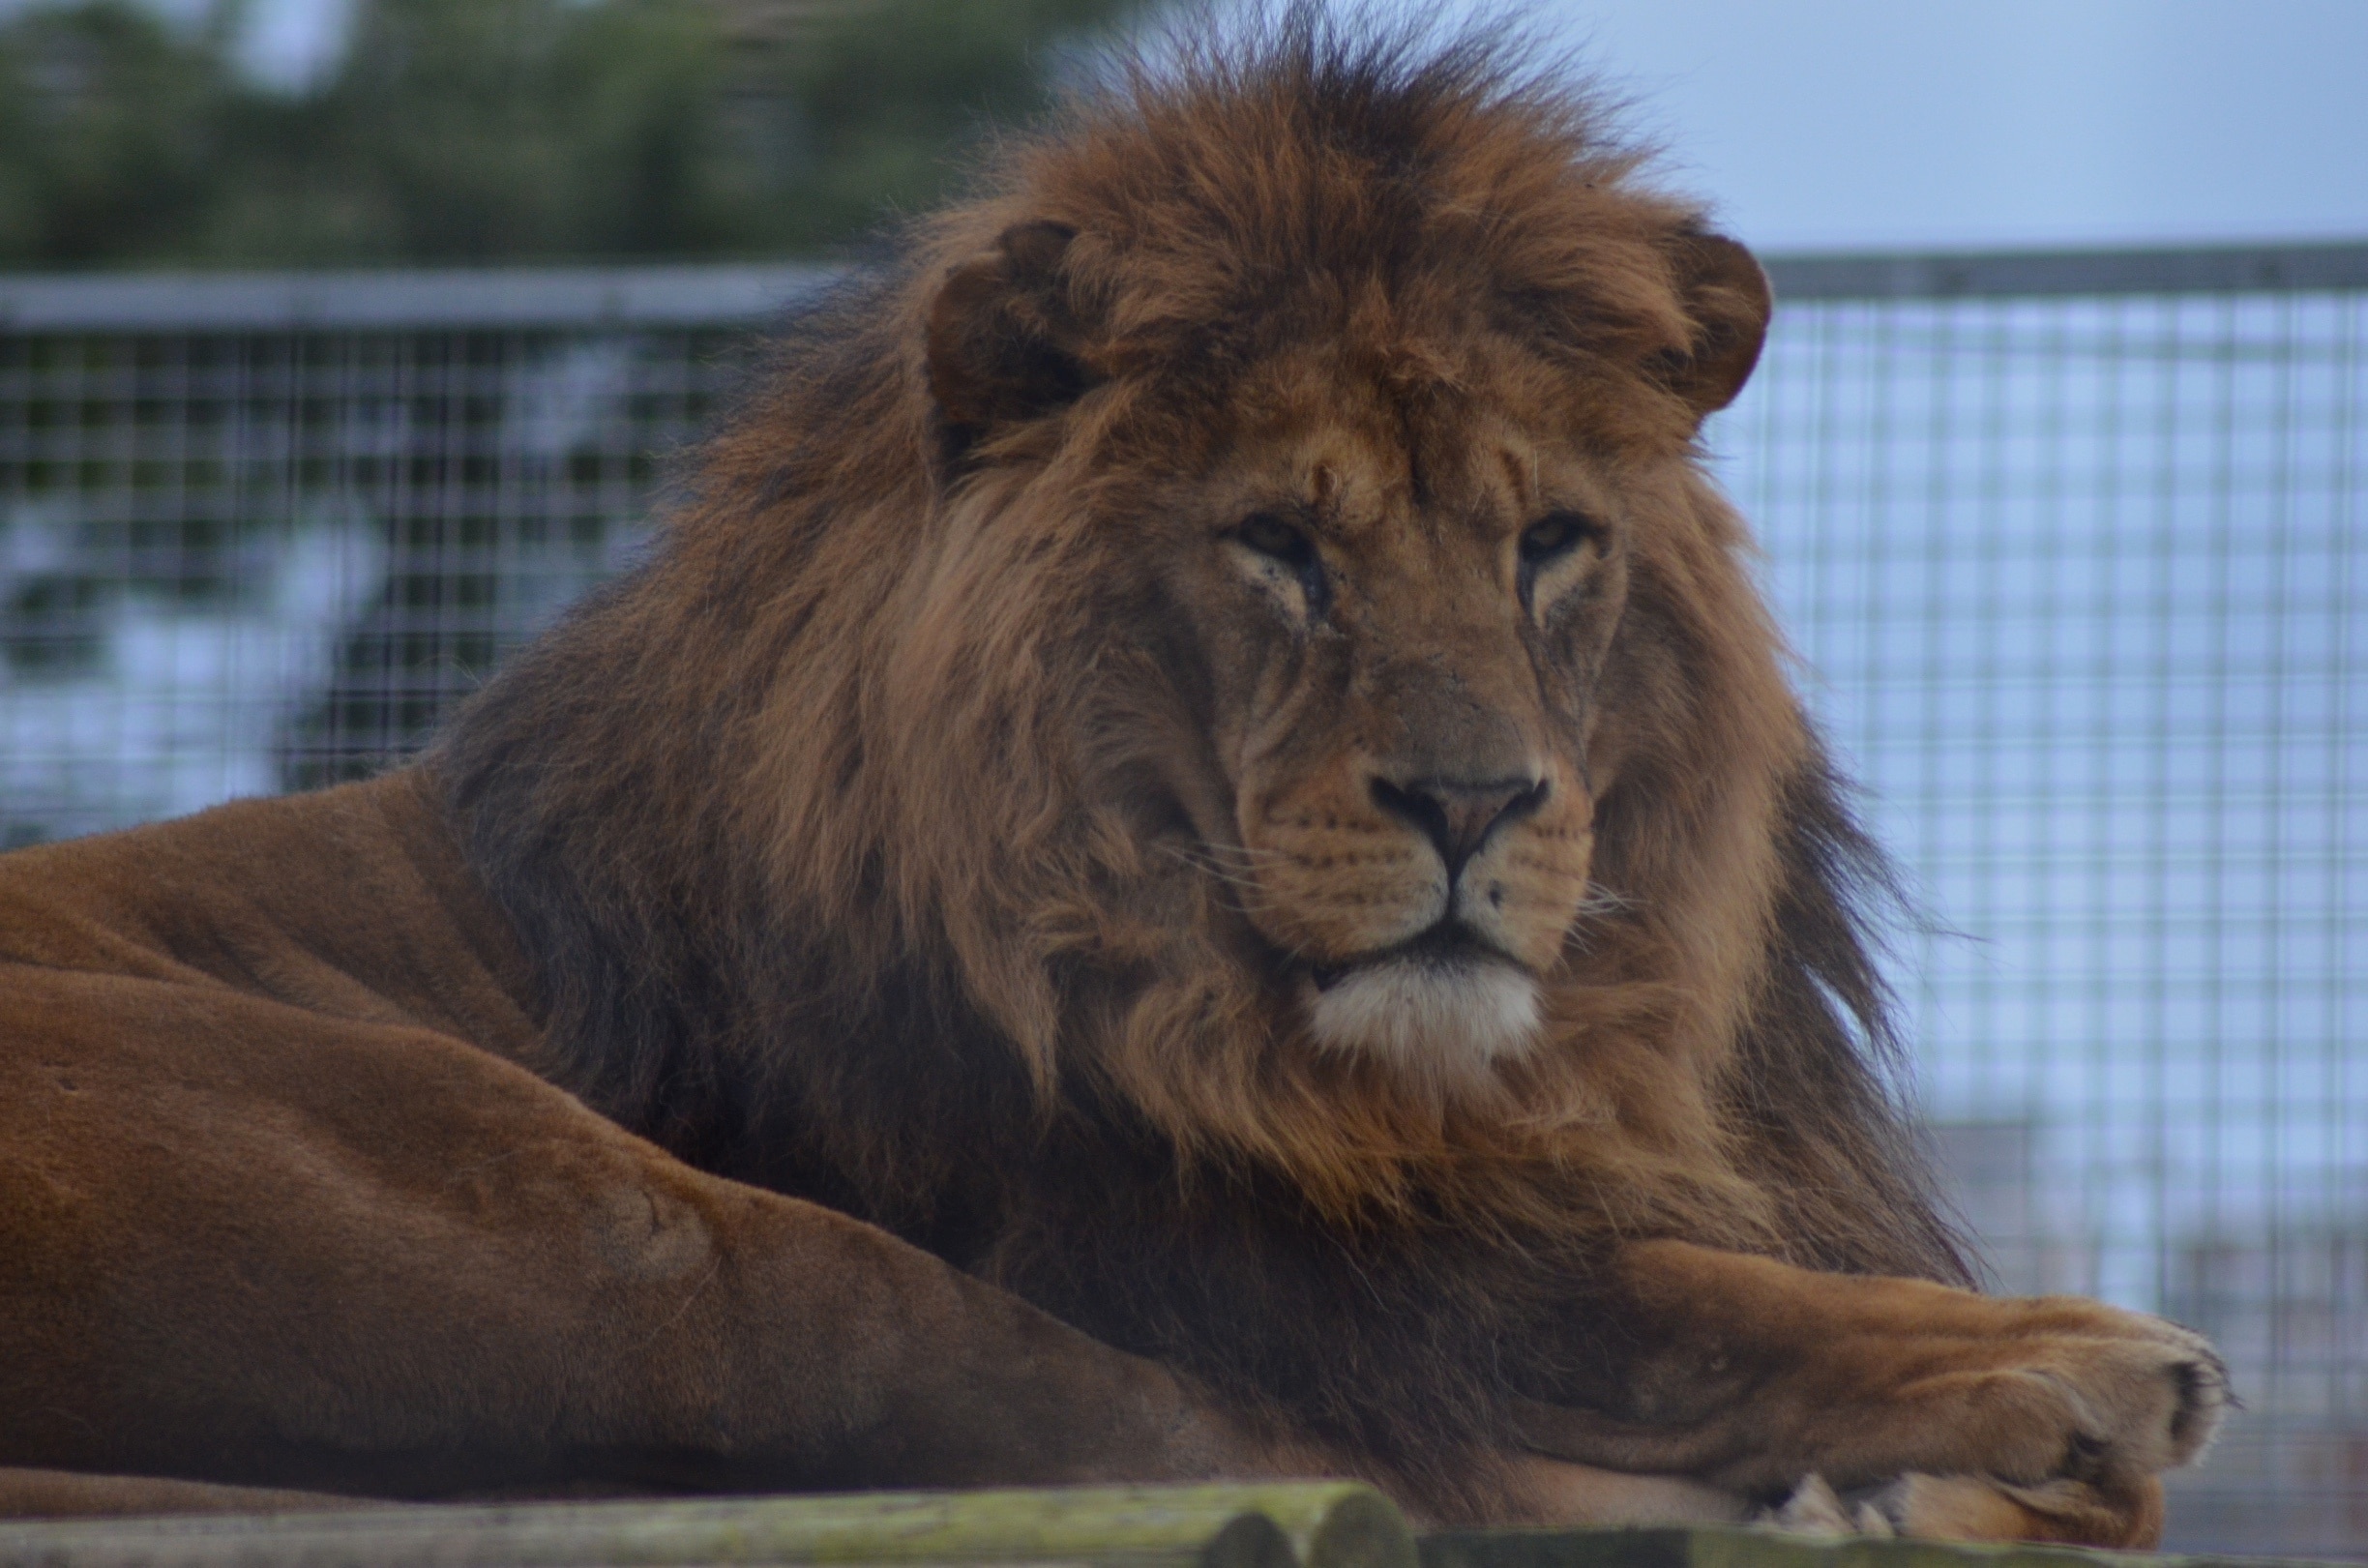 Taken at Newquay Zoo in Cornwall, UK.
#Cornwall #Newquay #Zoo #NewquayZoo #Animal #Wild #BigCat #Lion